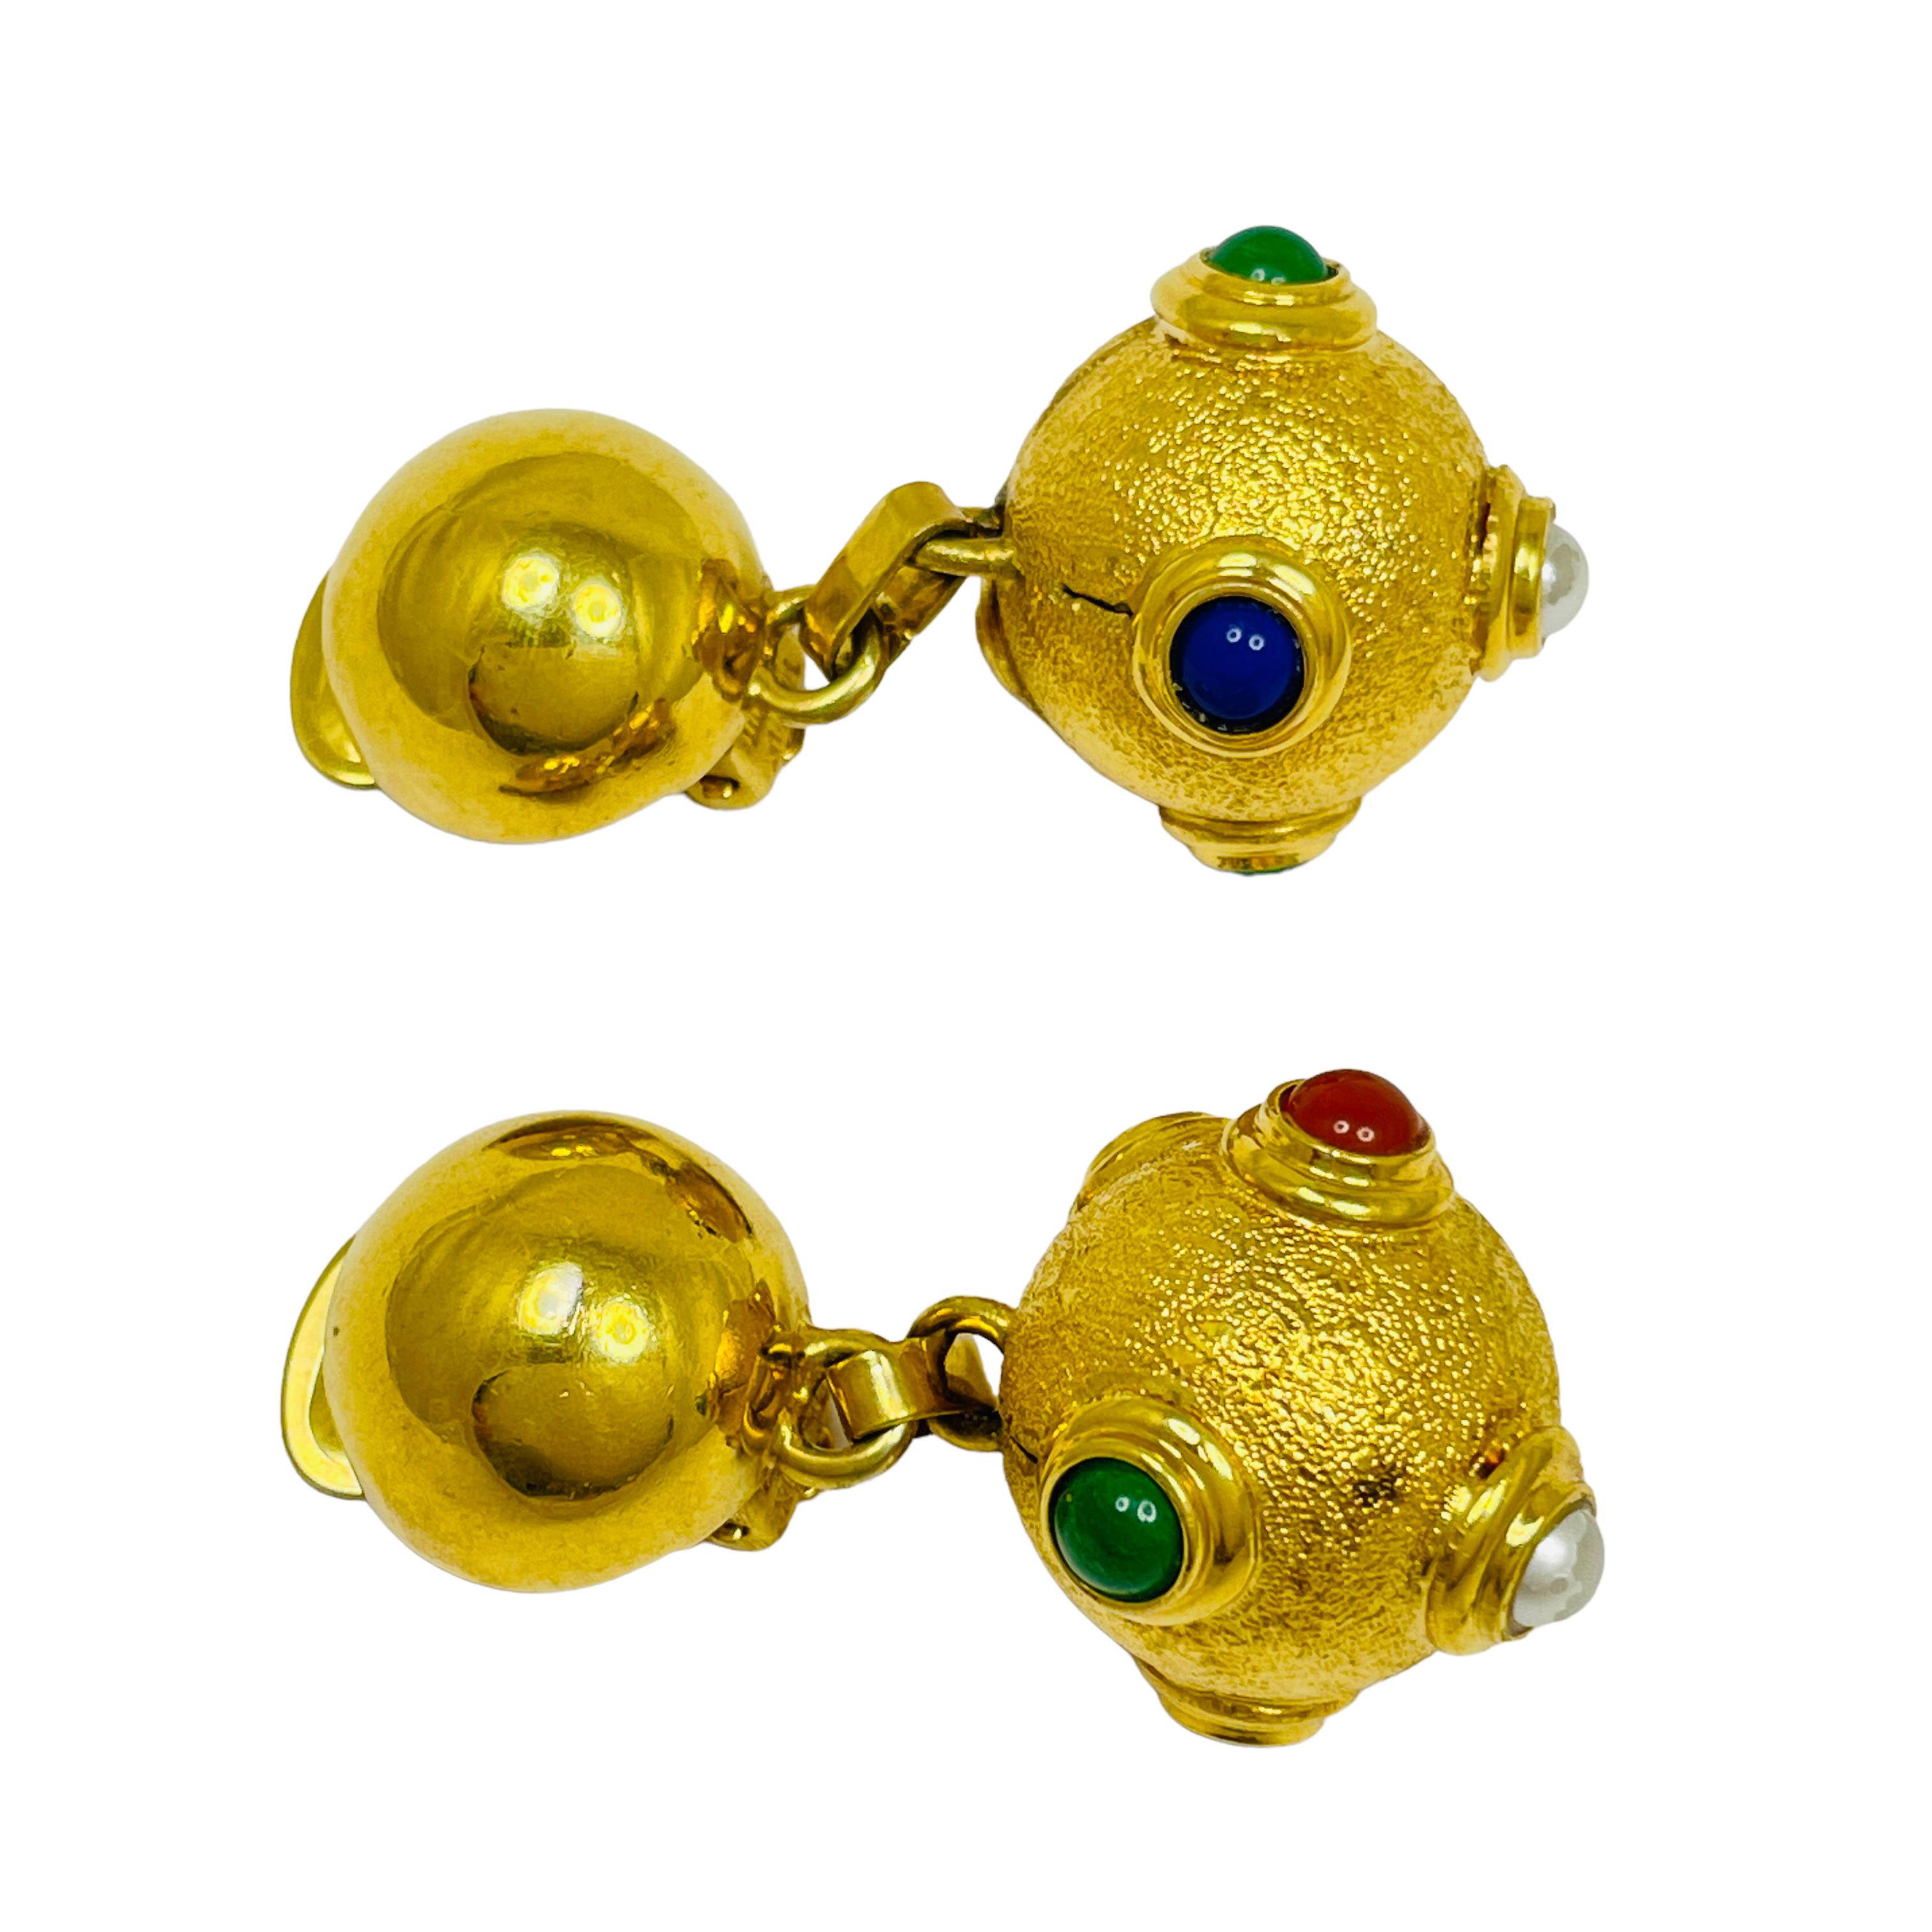 DETAILS

• signed BASCIO BIJOUX

• gold tone with glass cabochons

• vintage designer clip on earrings

MEASUREMENTS

• 2